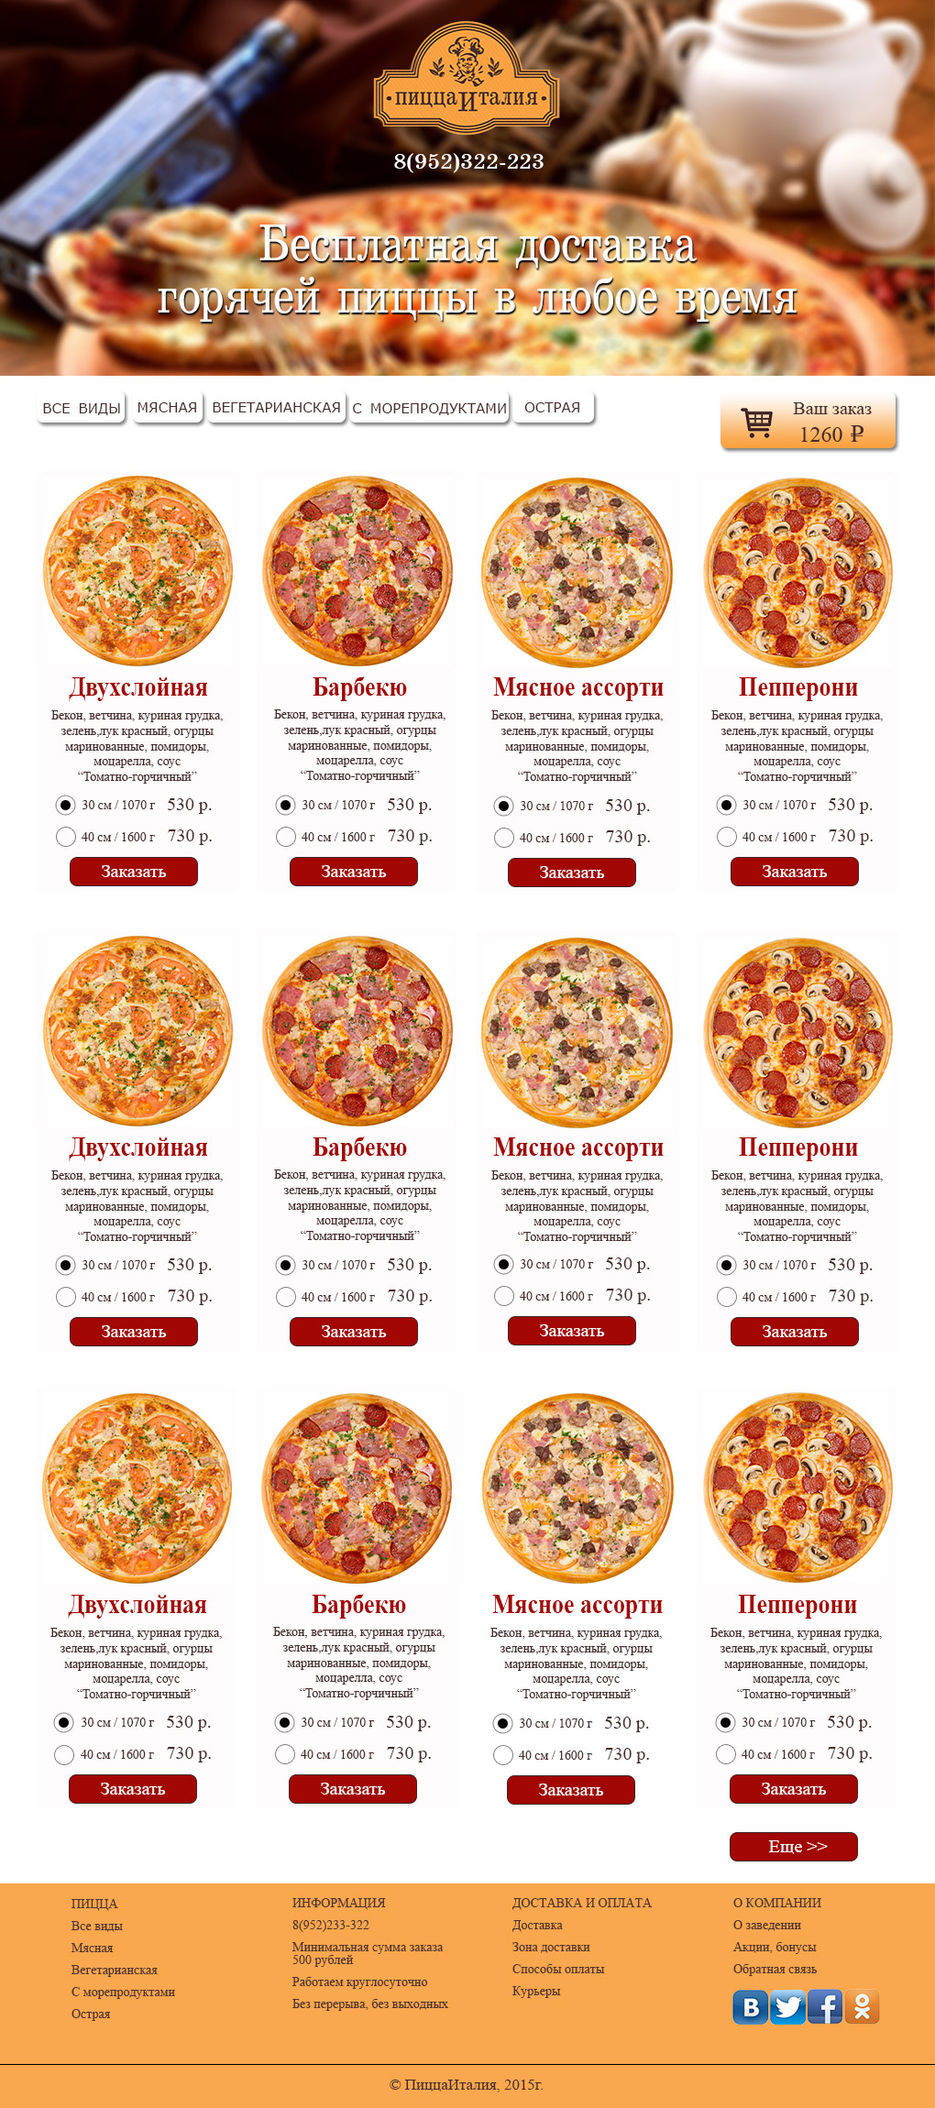 Пицца италия заречный. Названия пицц. Название пиццерии. Название пиц. Пиццы названия и состав.